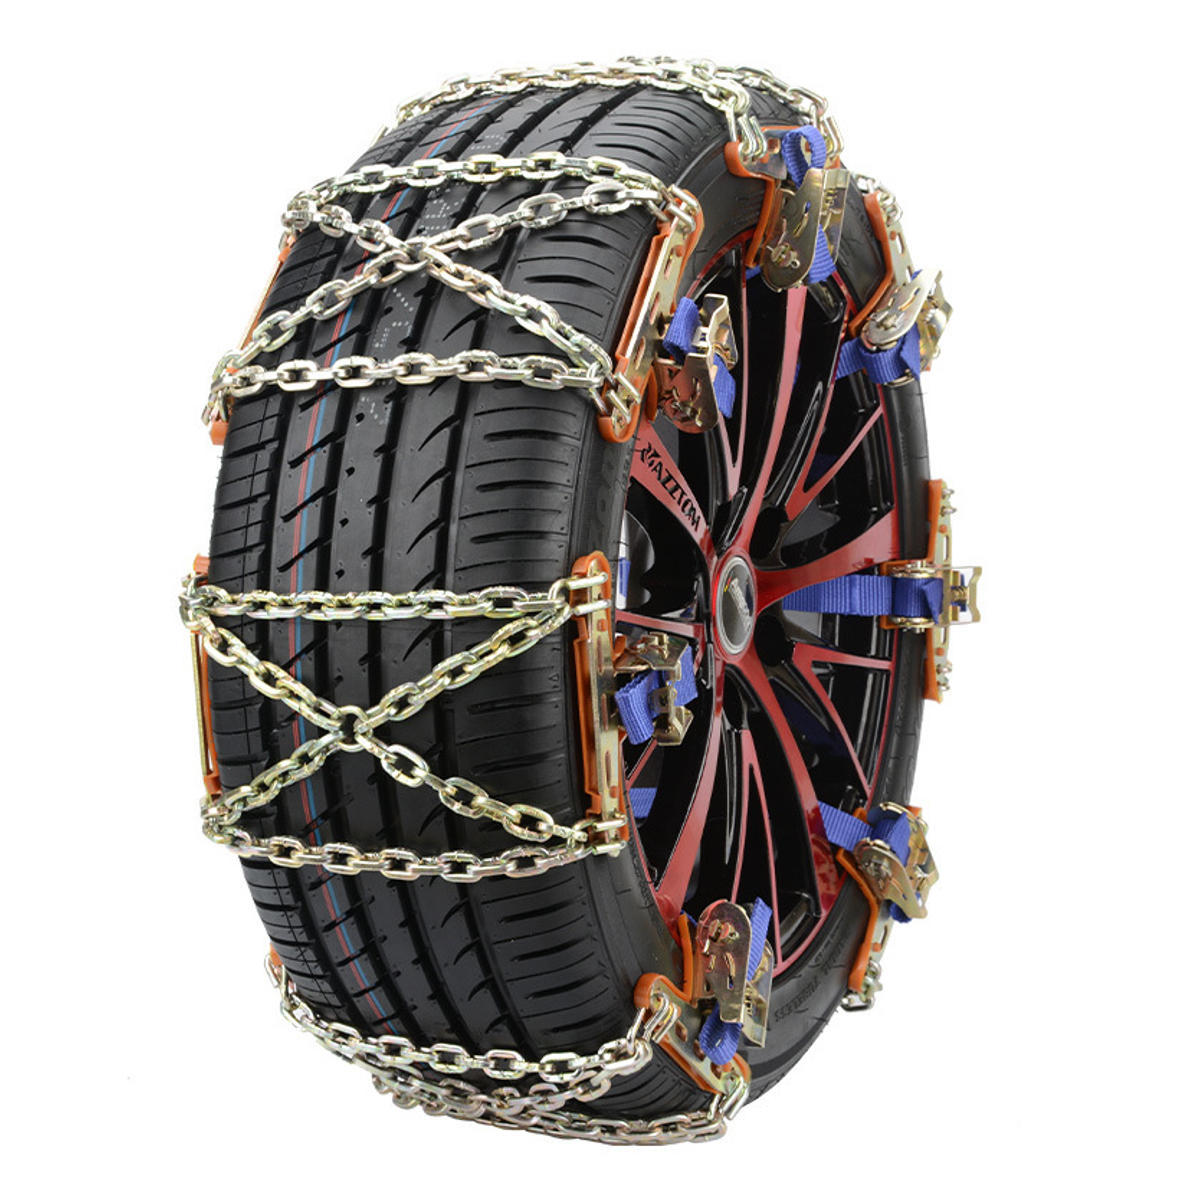 

1pcs Wheel Tire Snow Anti-skid Chains for Car Truck SUV Emergency Winter Universal